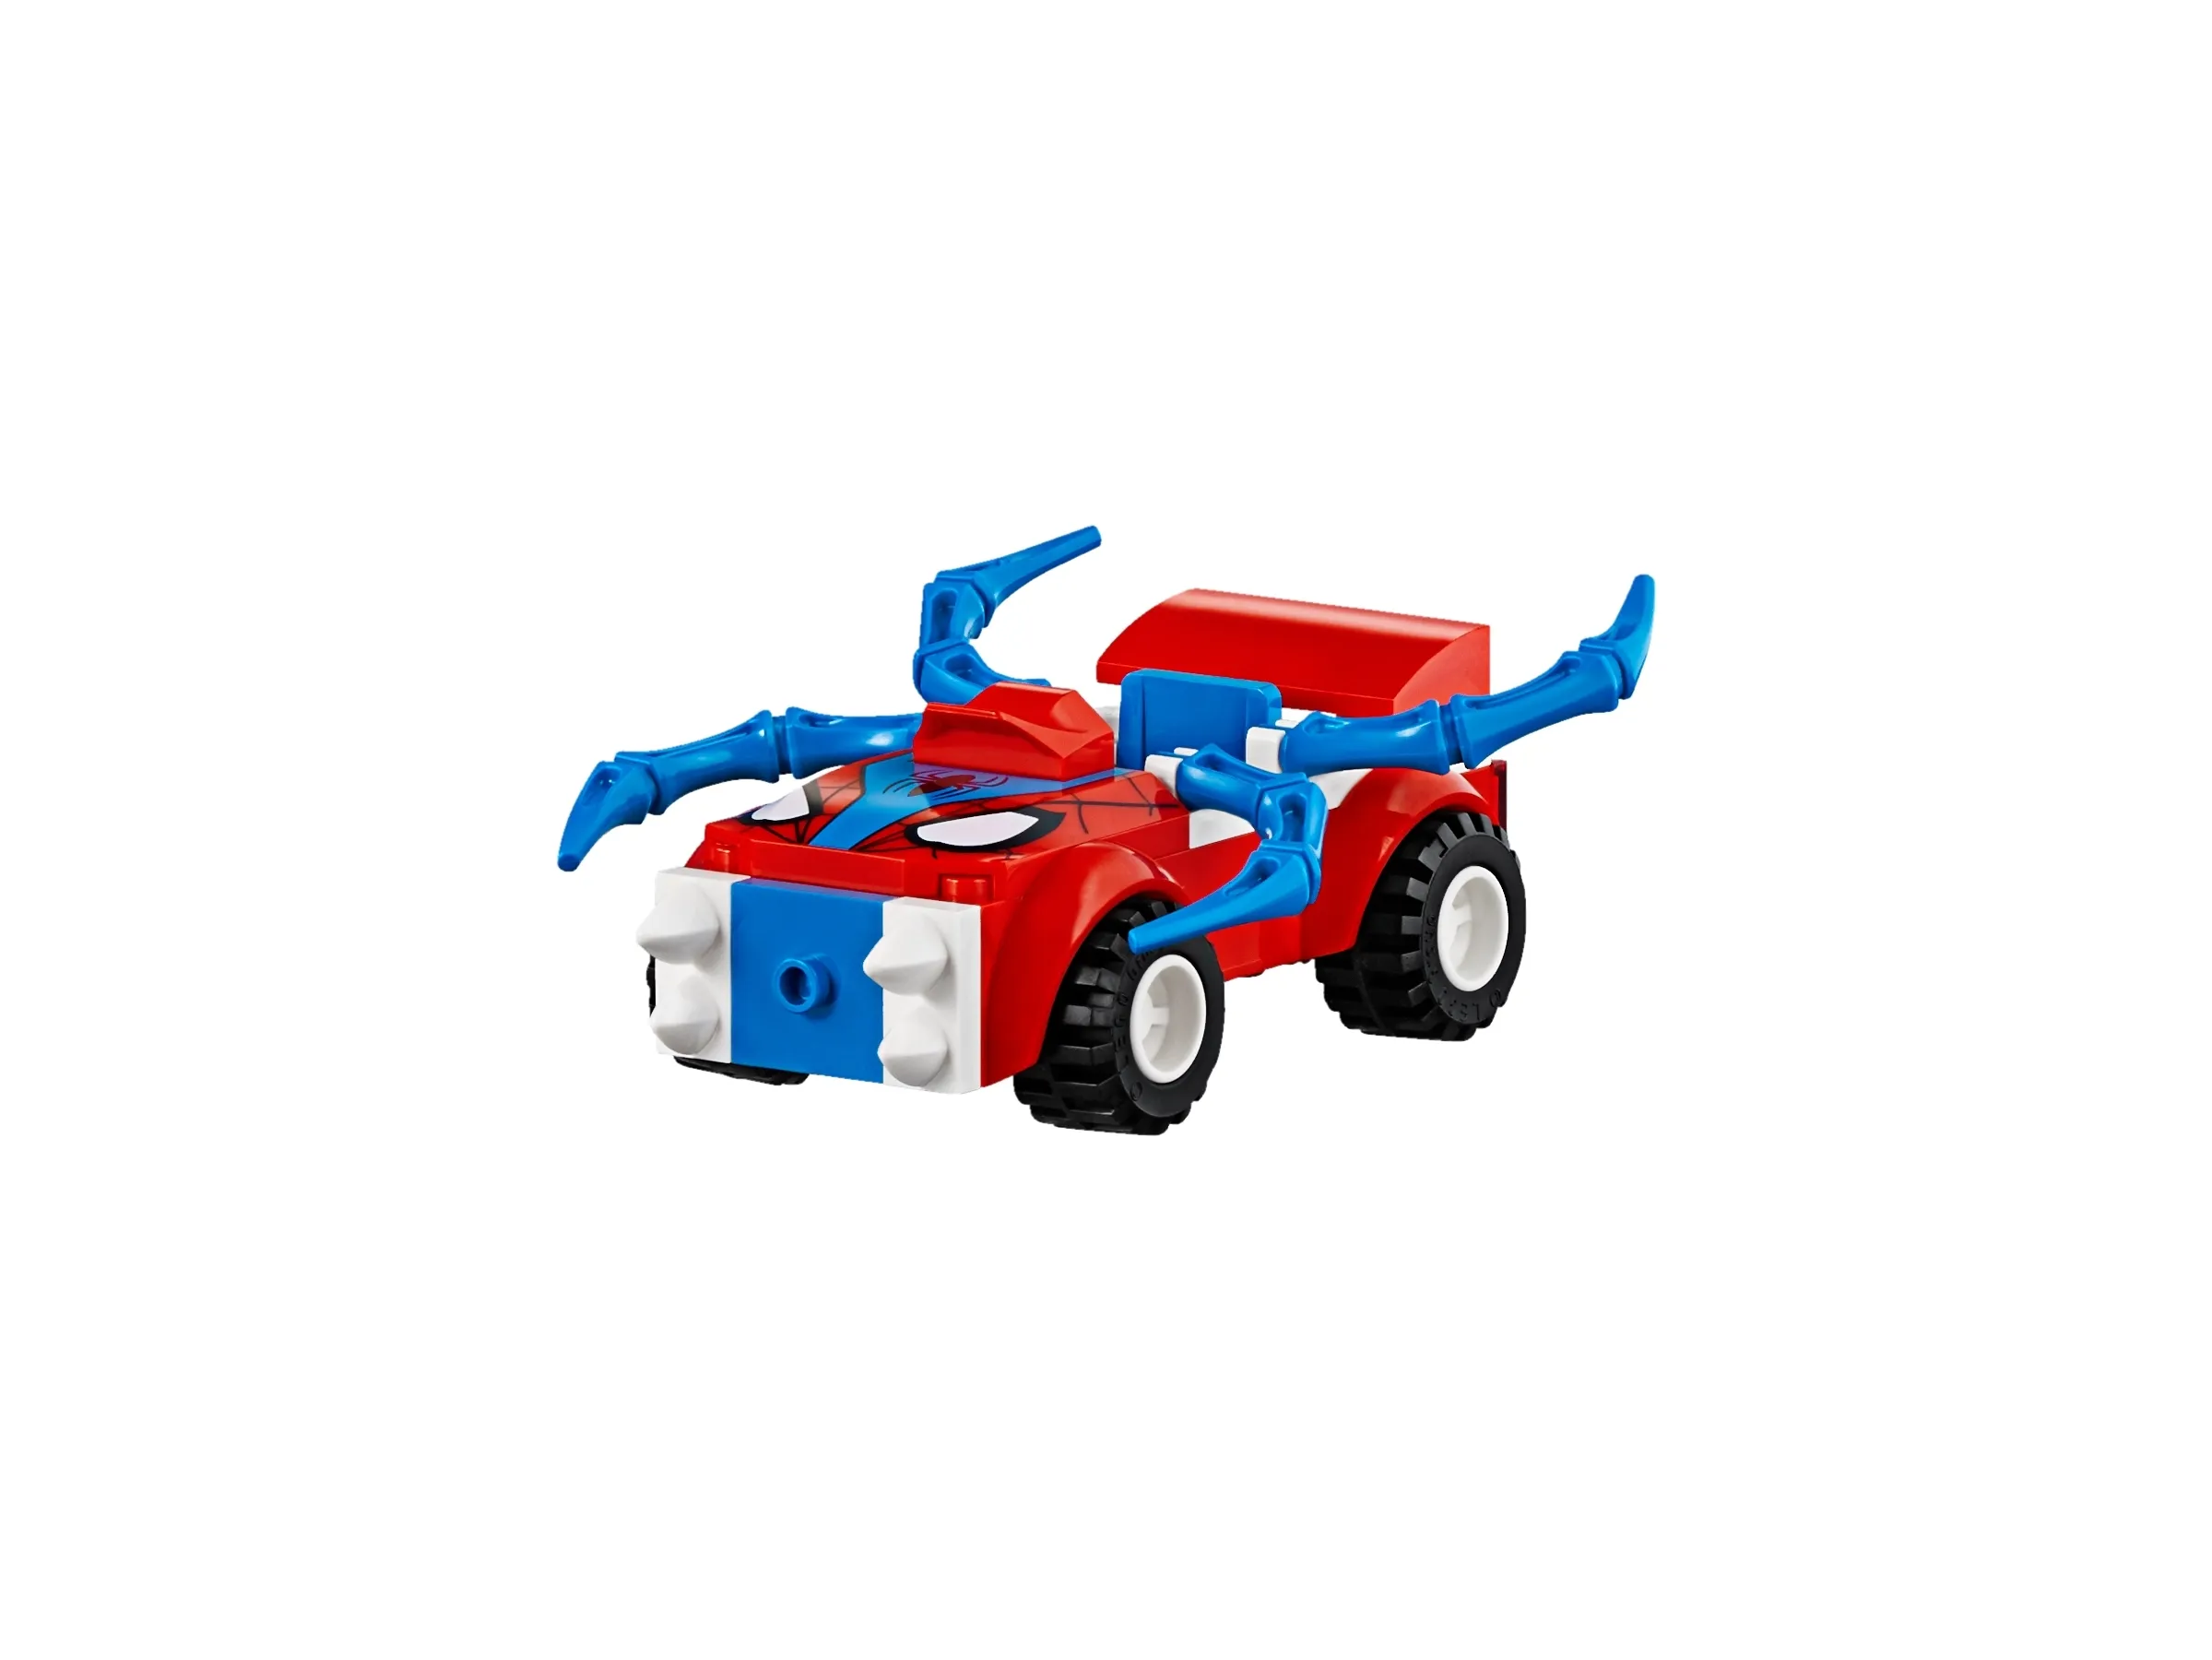 LEGO Juniors/4+ Marvel Super Heroes Spider-Man vs. Scorpion Street Showdown  10754 Building Kit (125 Pieces)